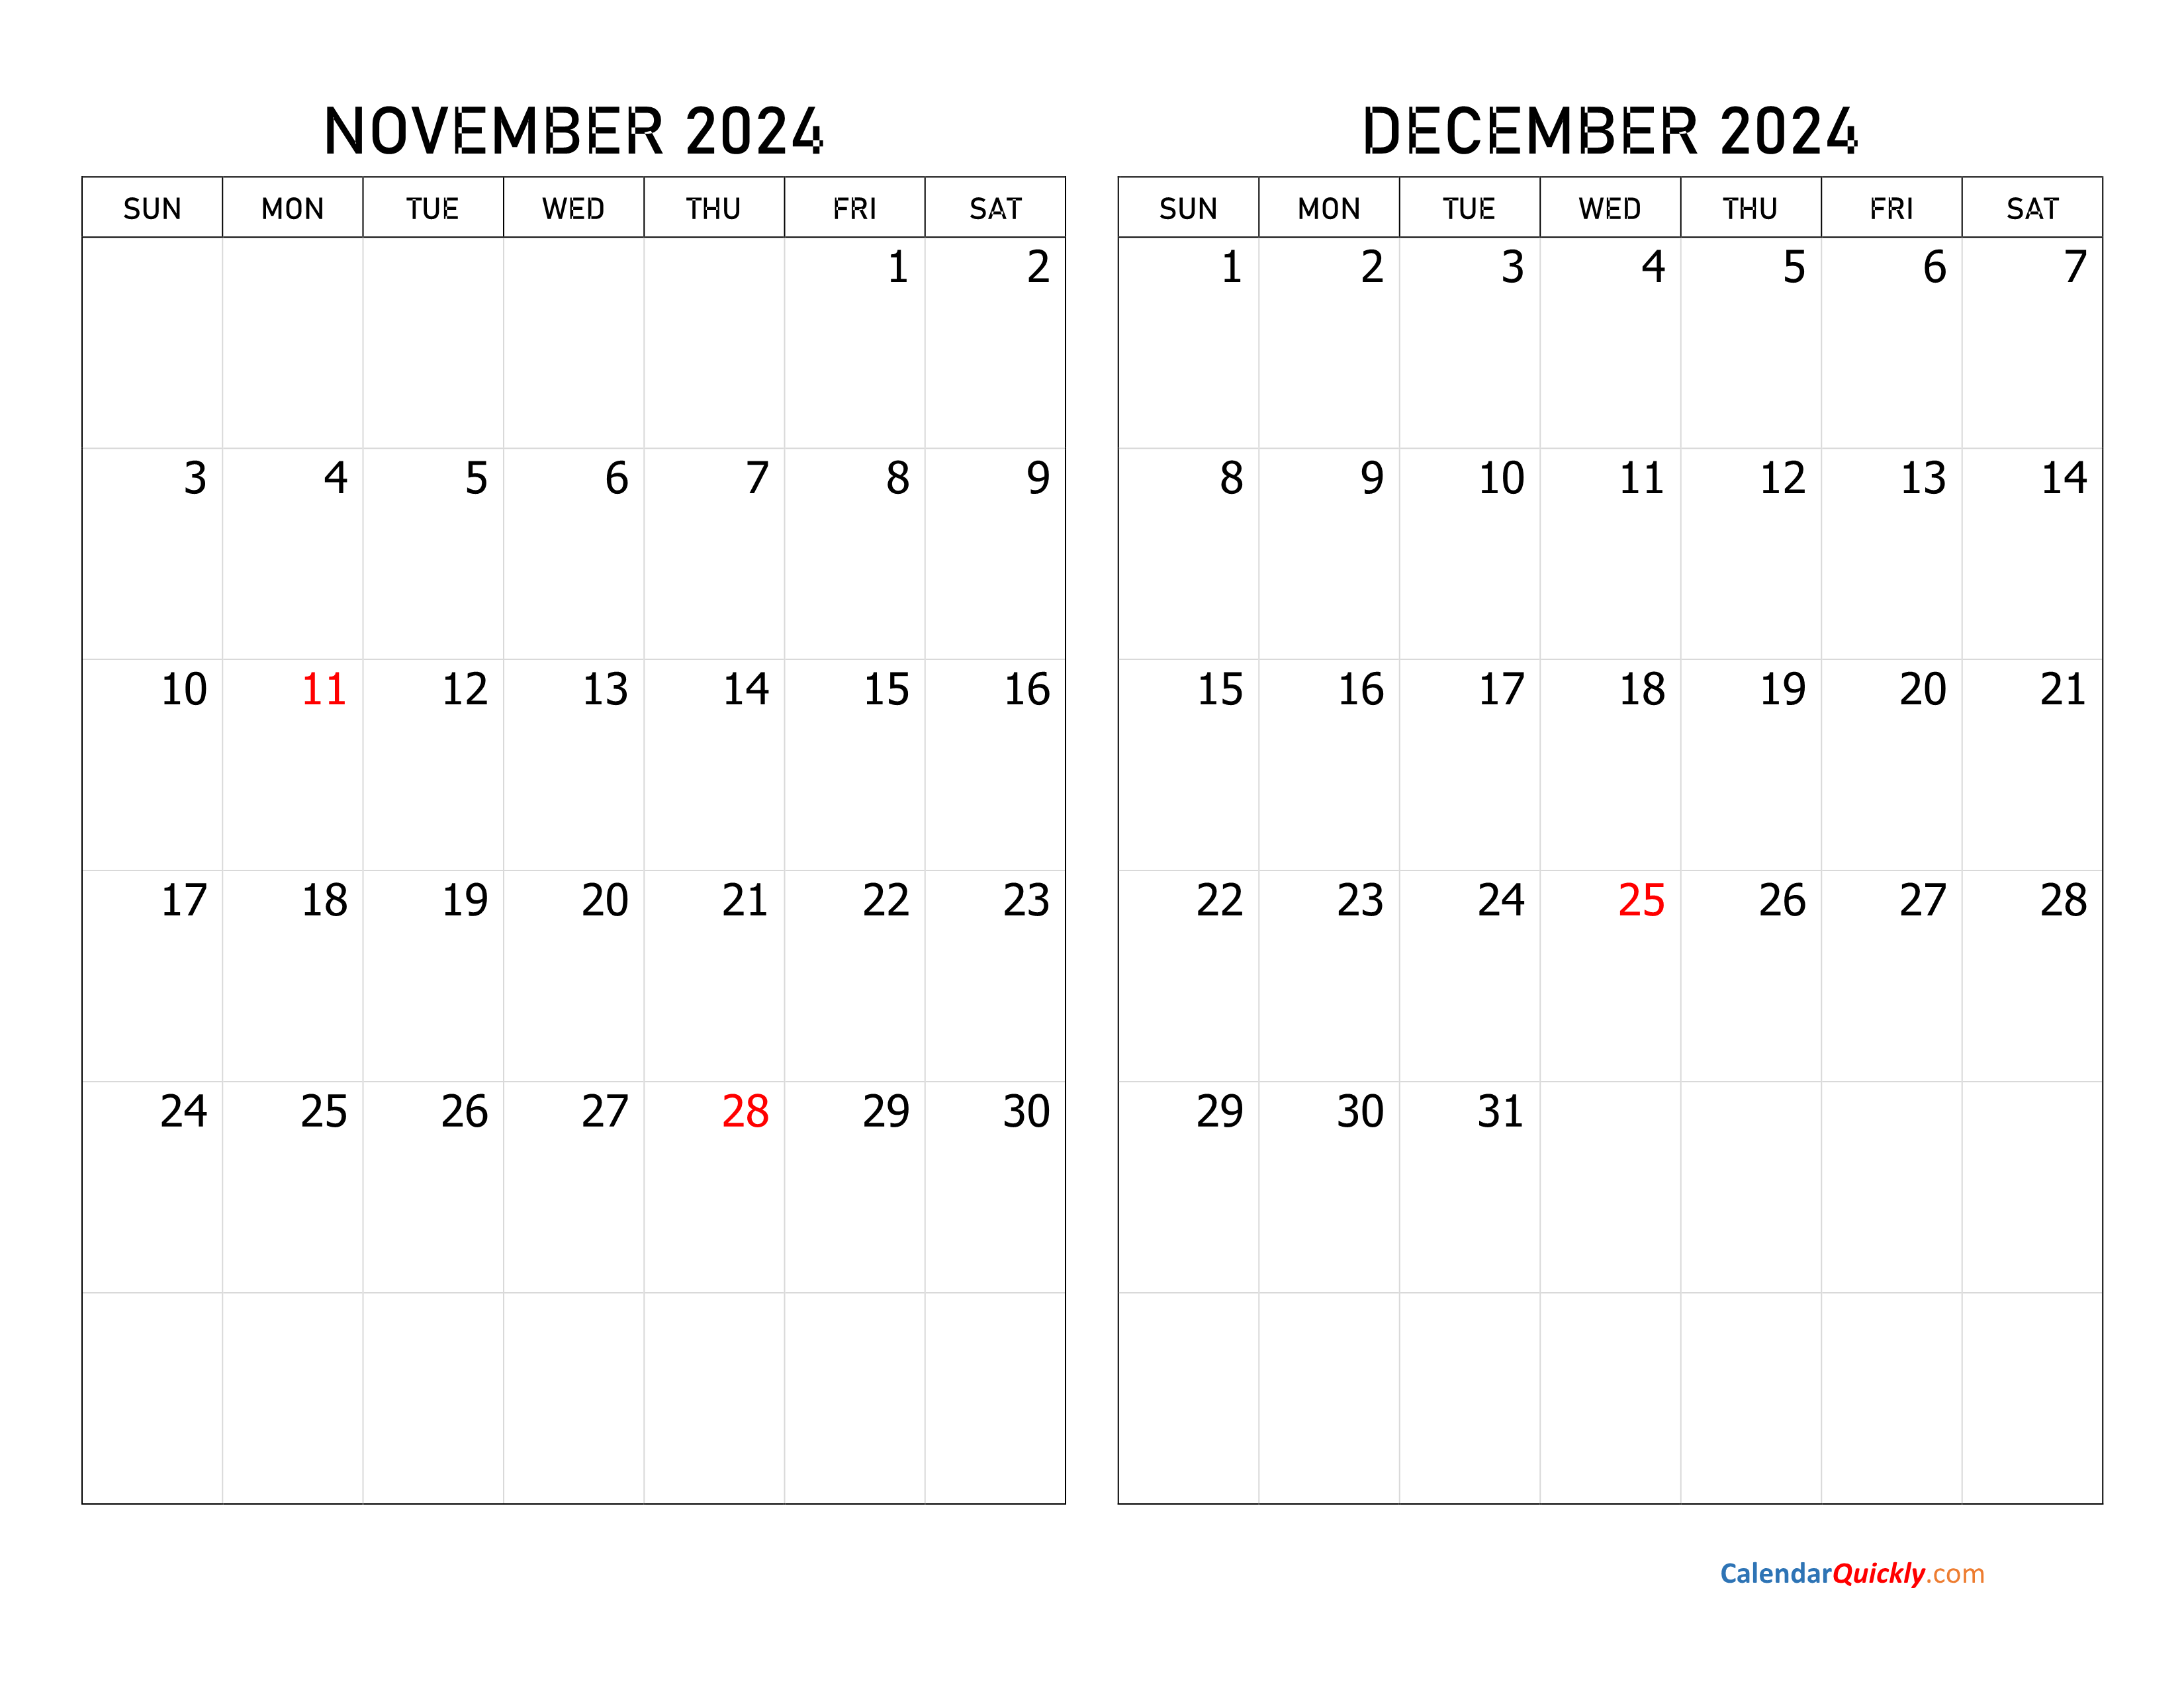 November and December 2024 Calendar Calendar Quickly